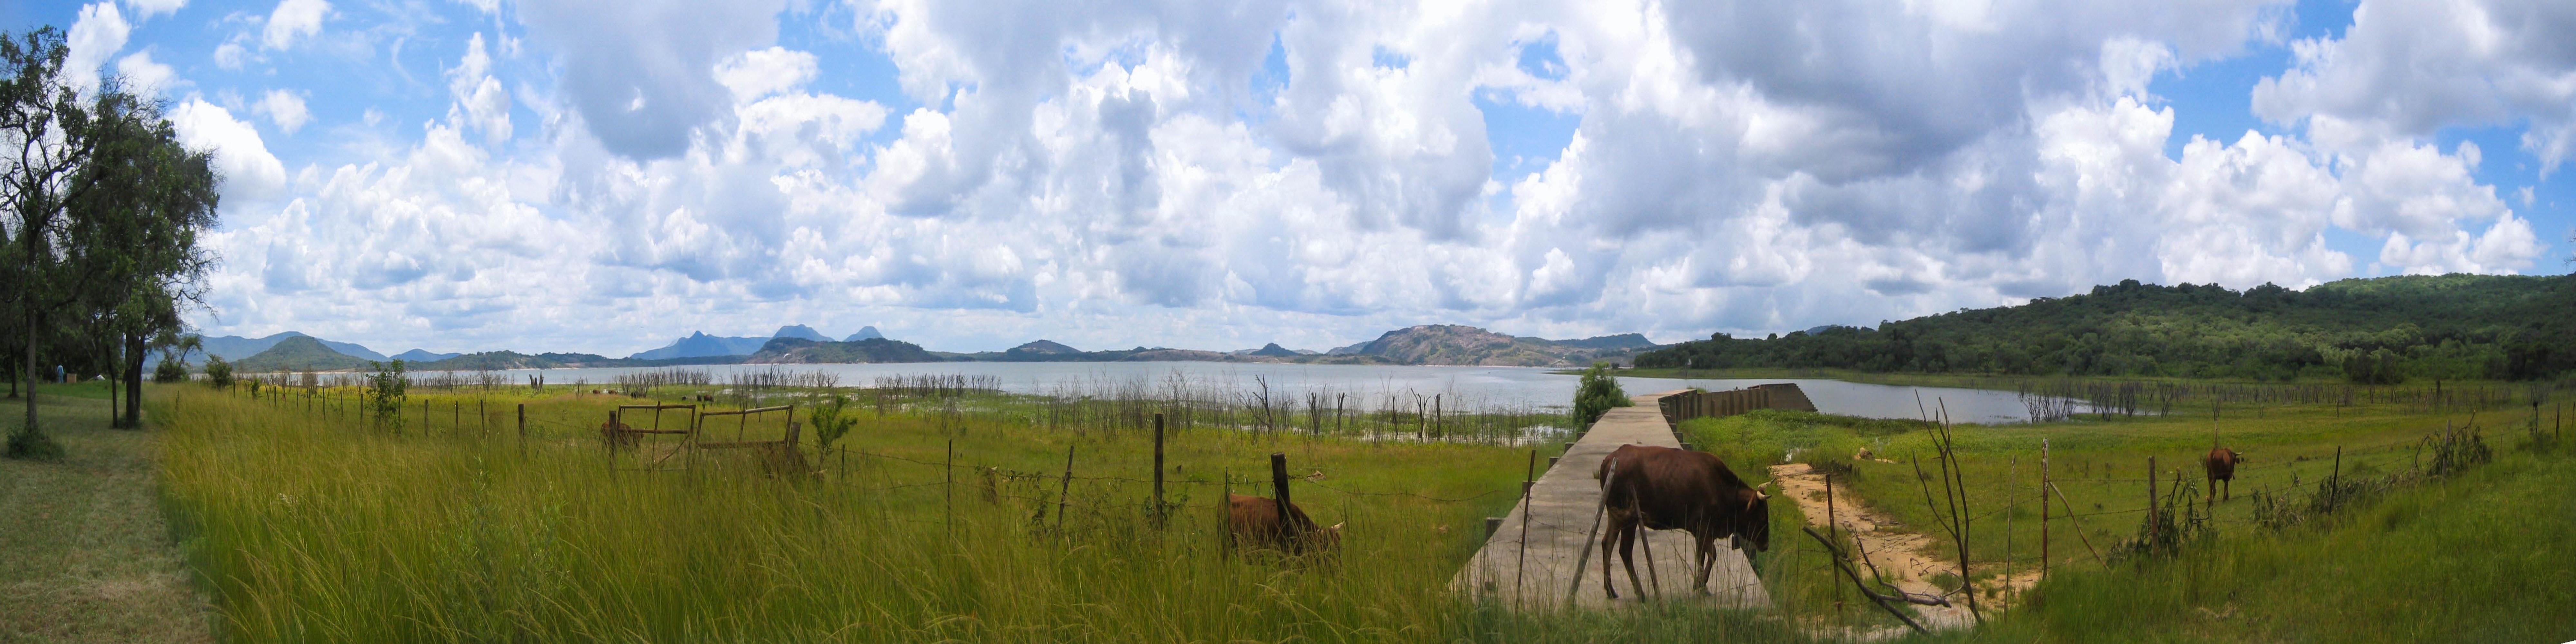 Panorama_Zimbabwe (Copy).jpg